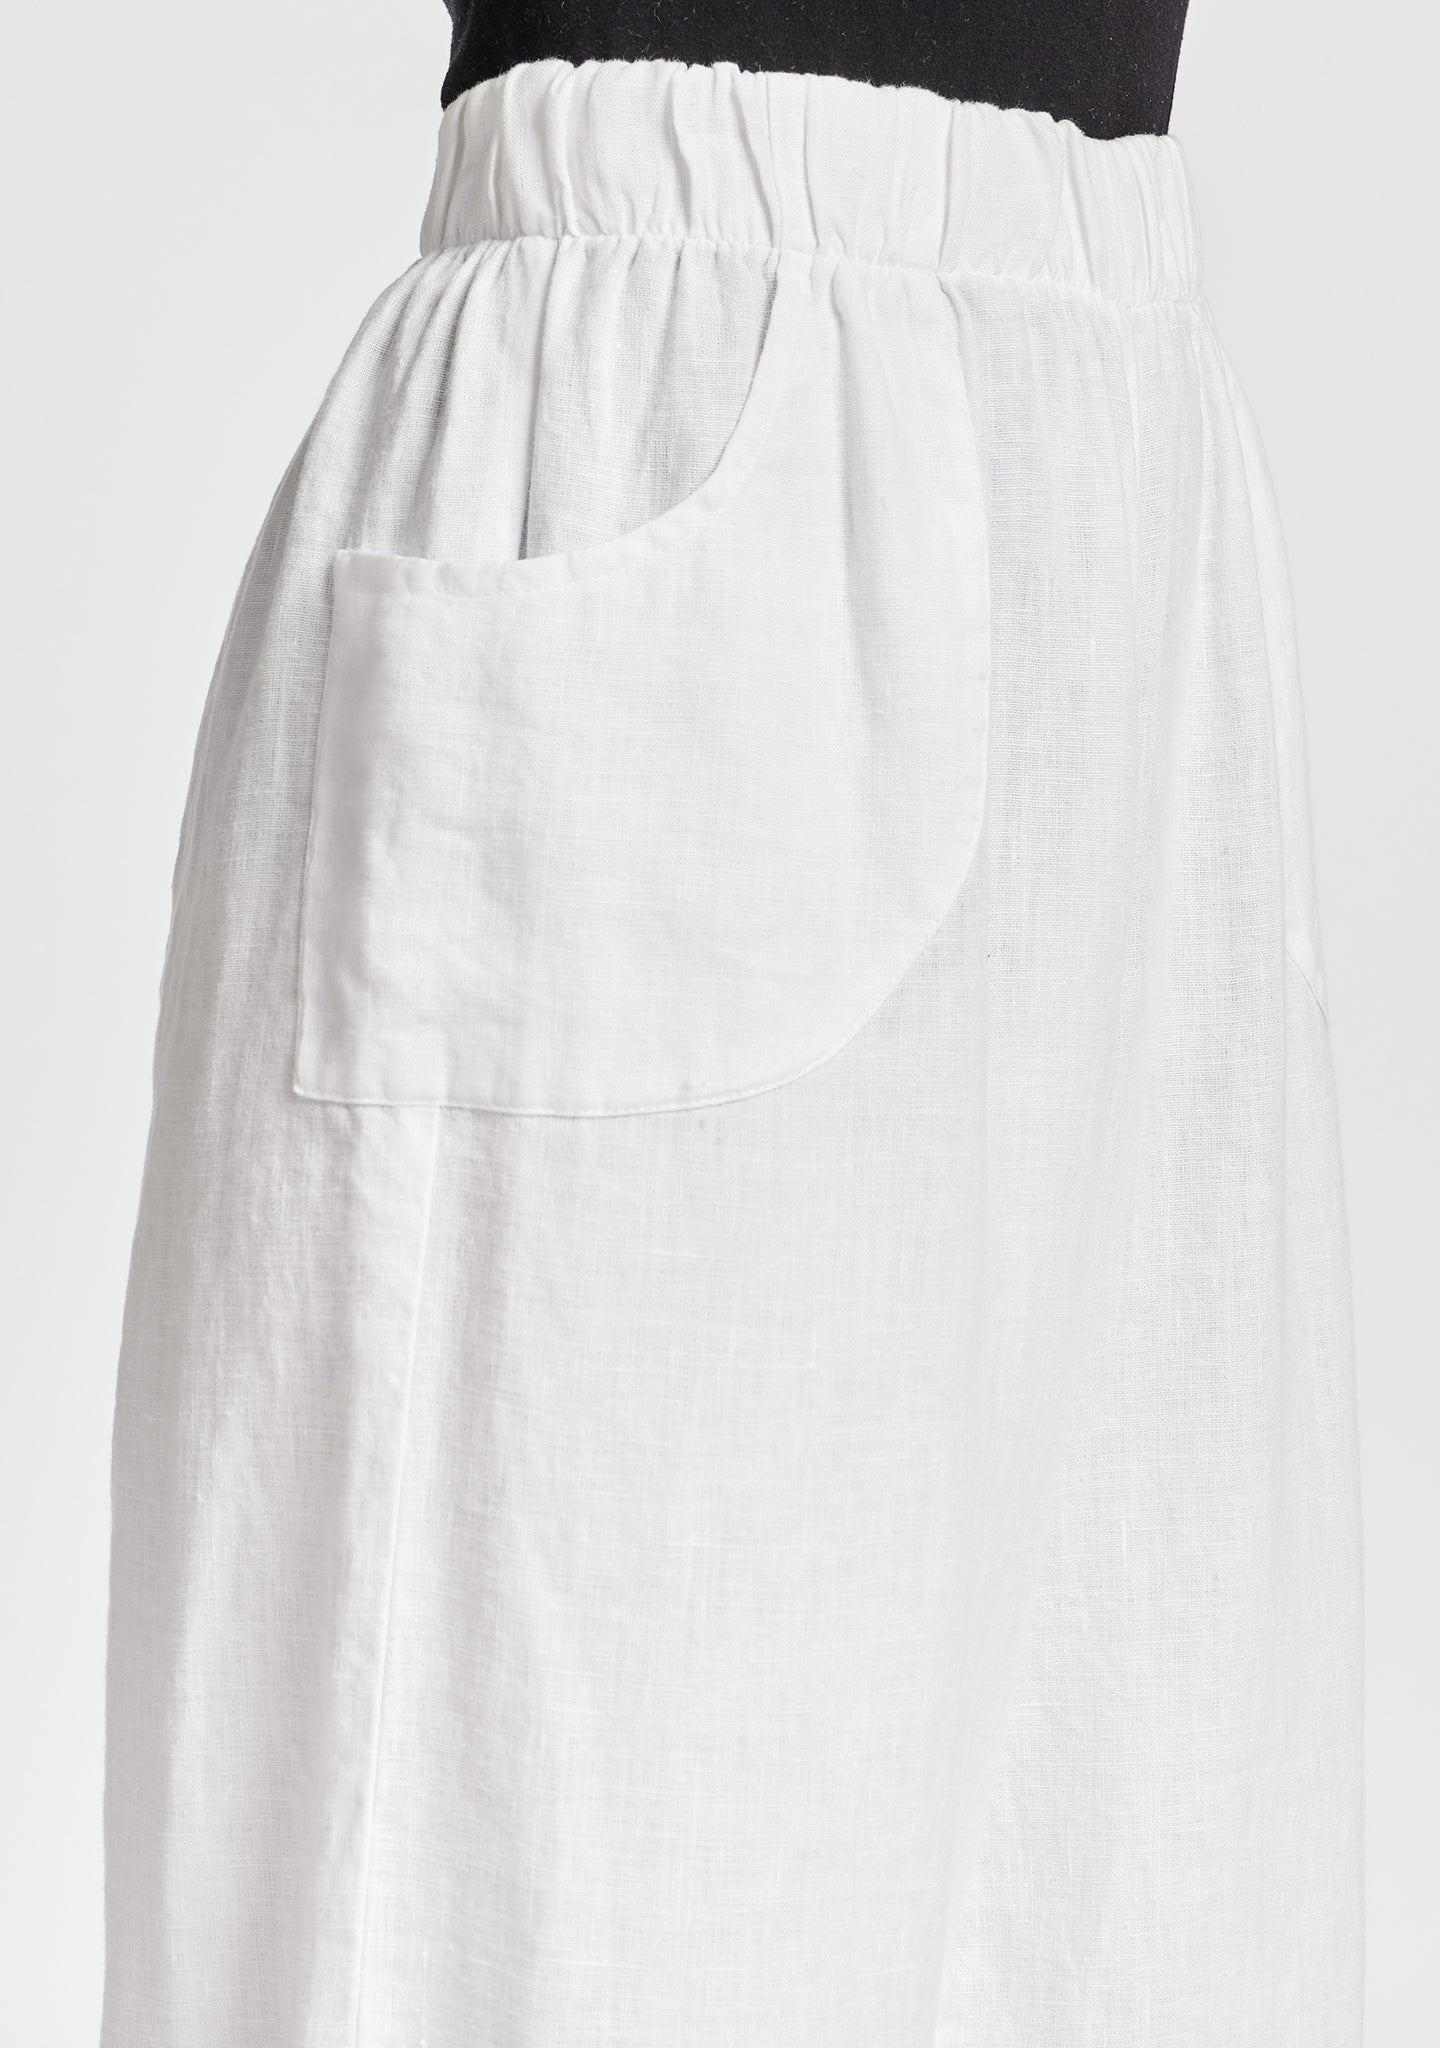 Seamly Pant *NEW – Linen Woman